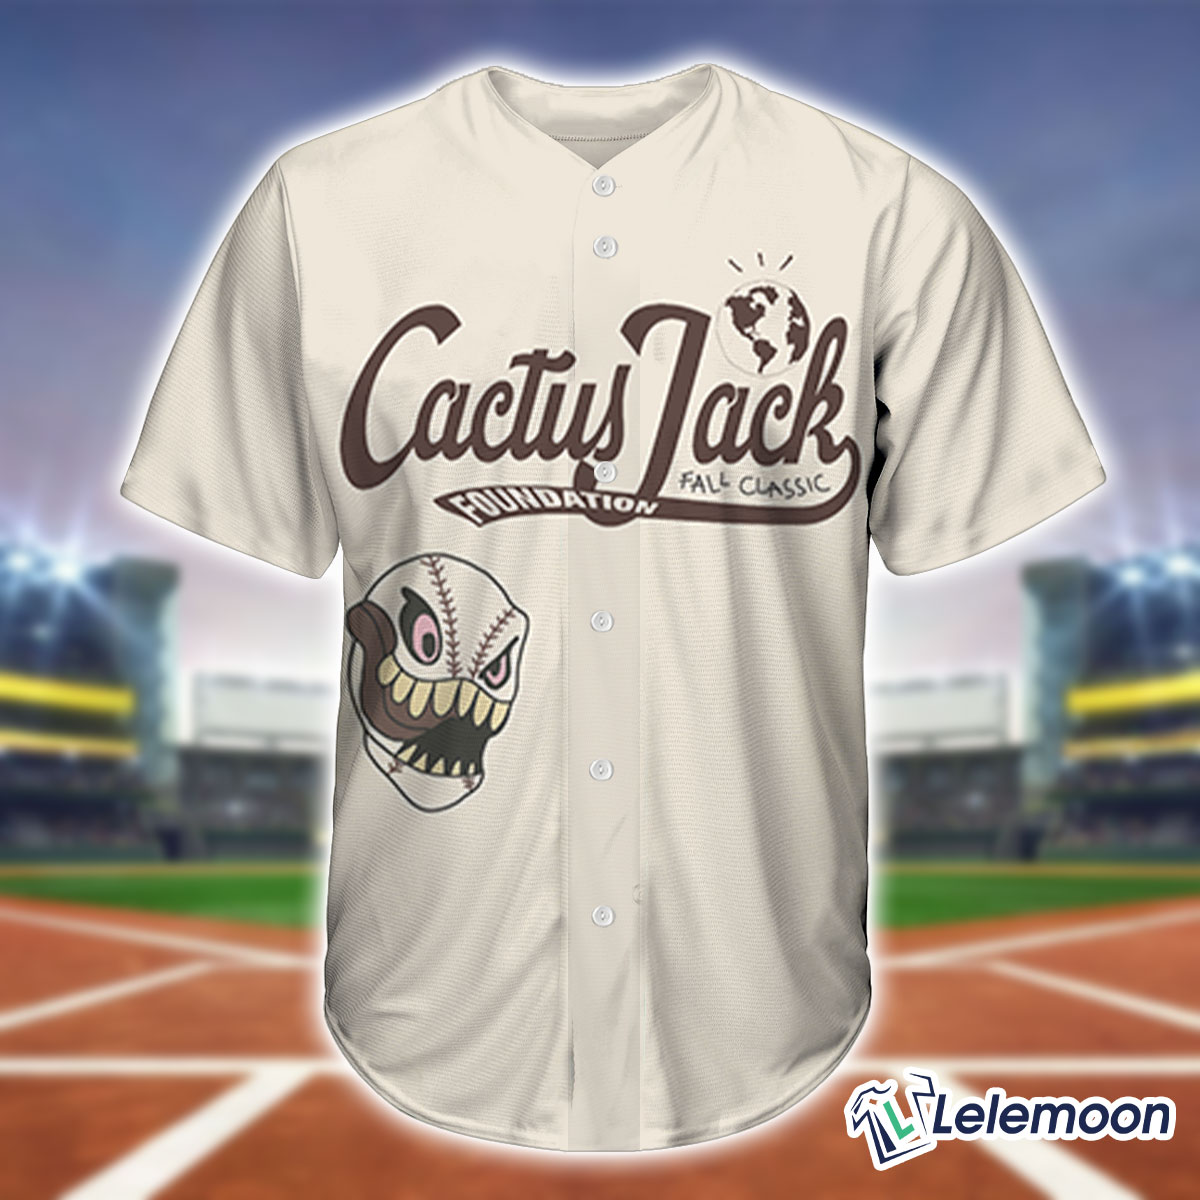 Travis Scott Cactus Jack Foundation Fall Classic Baseball Jersey   Lelemoon